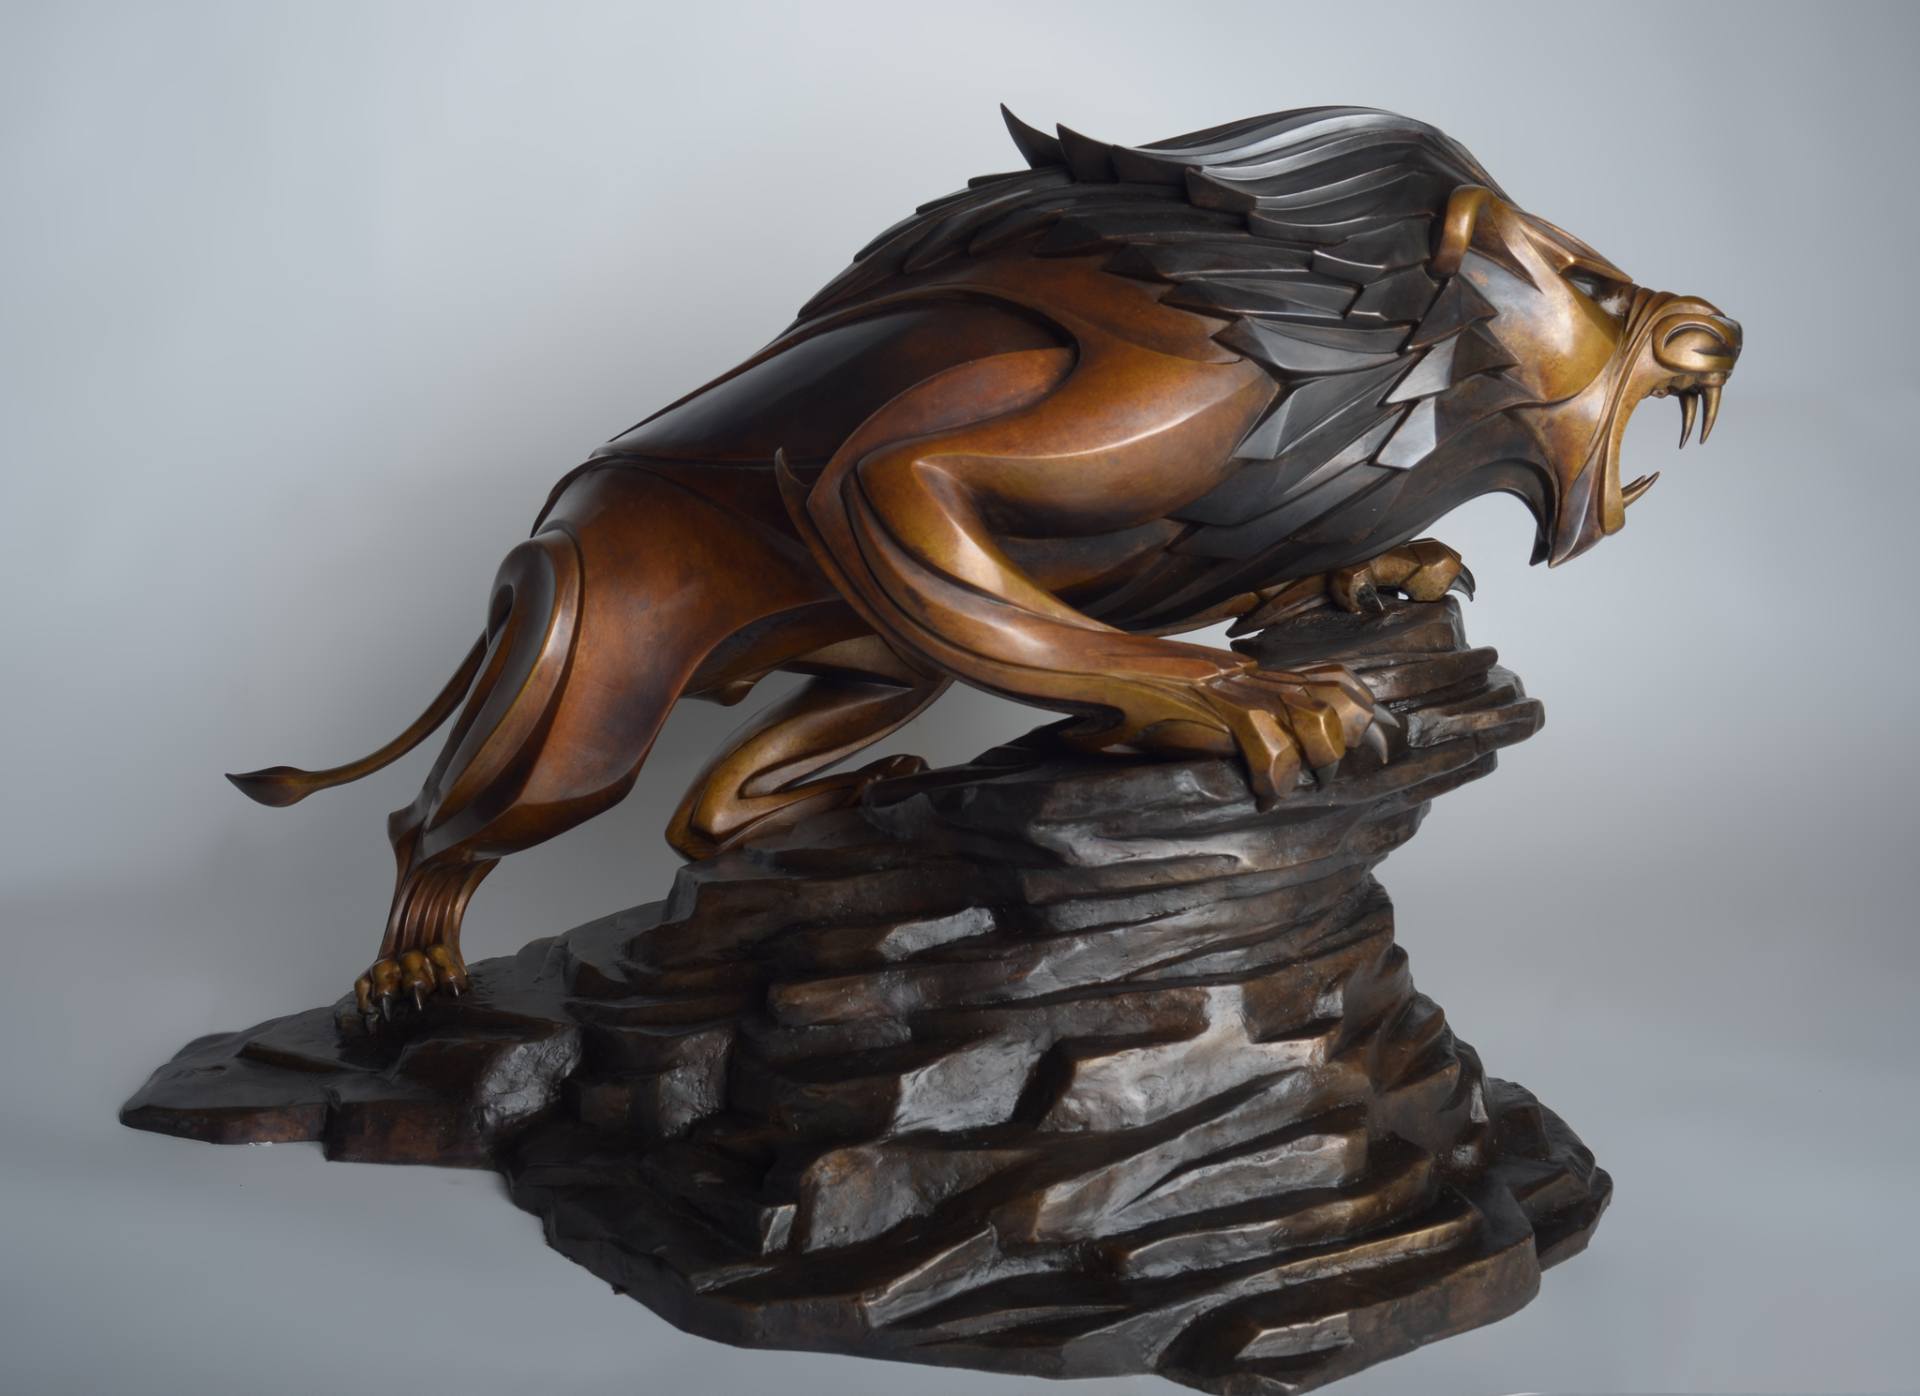 Saatchi Art: Barbary Lion Sculpture by Gleb Kriukov